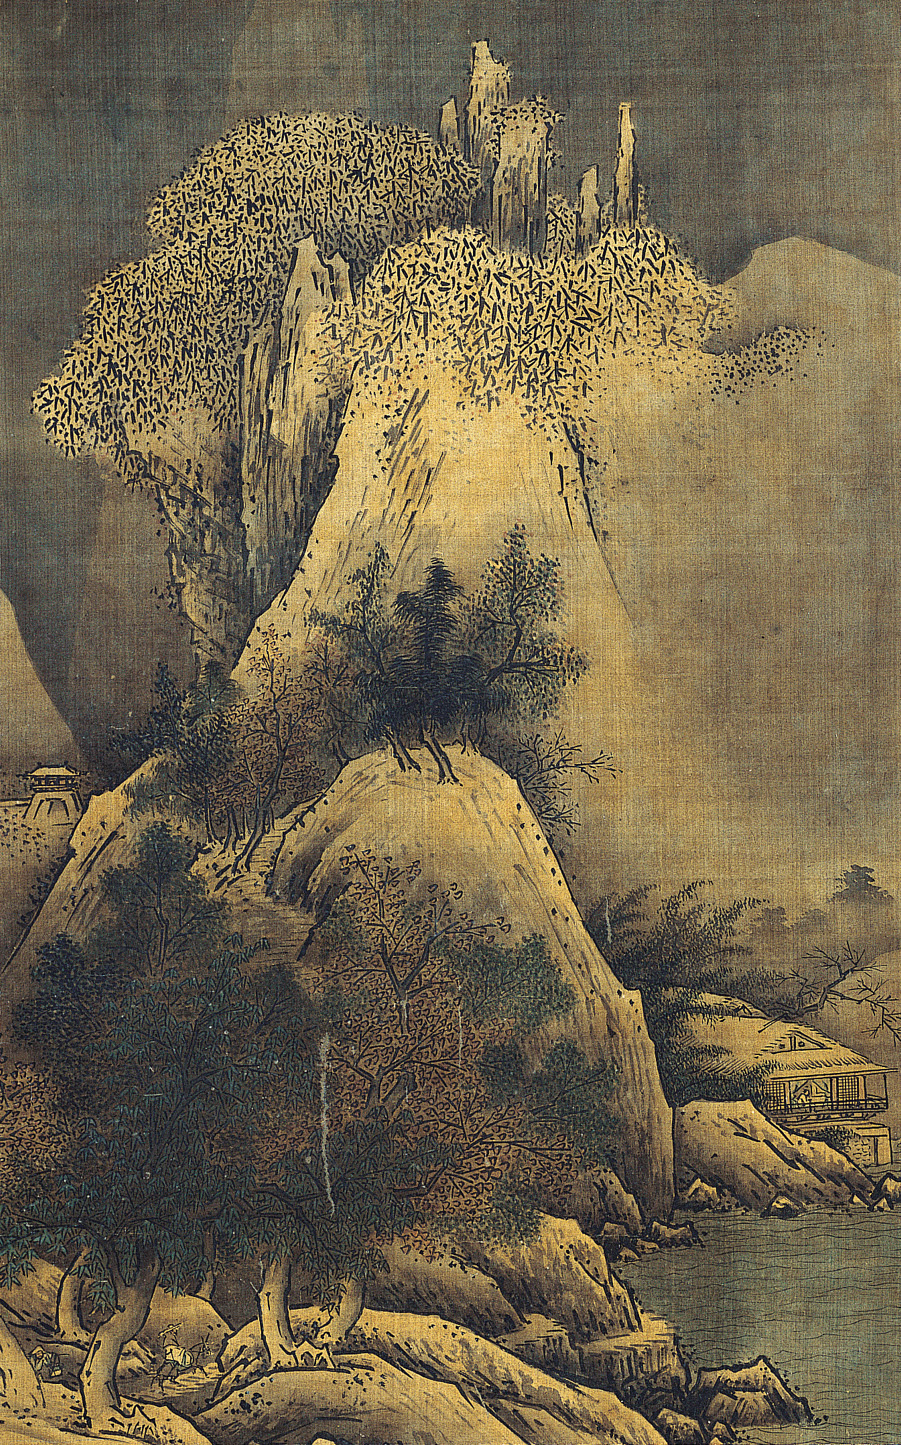 SESSHU, Winter, from Landscape of the Four Seasons